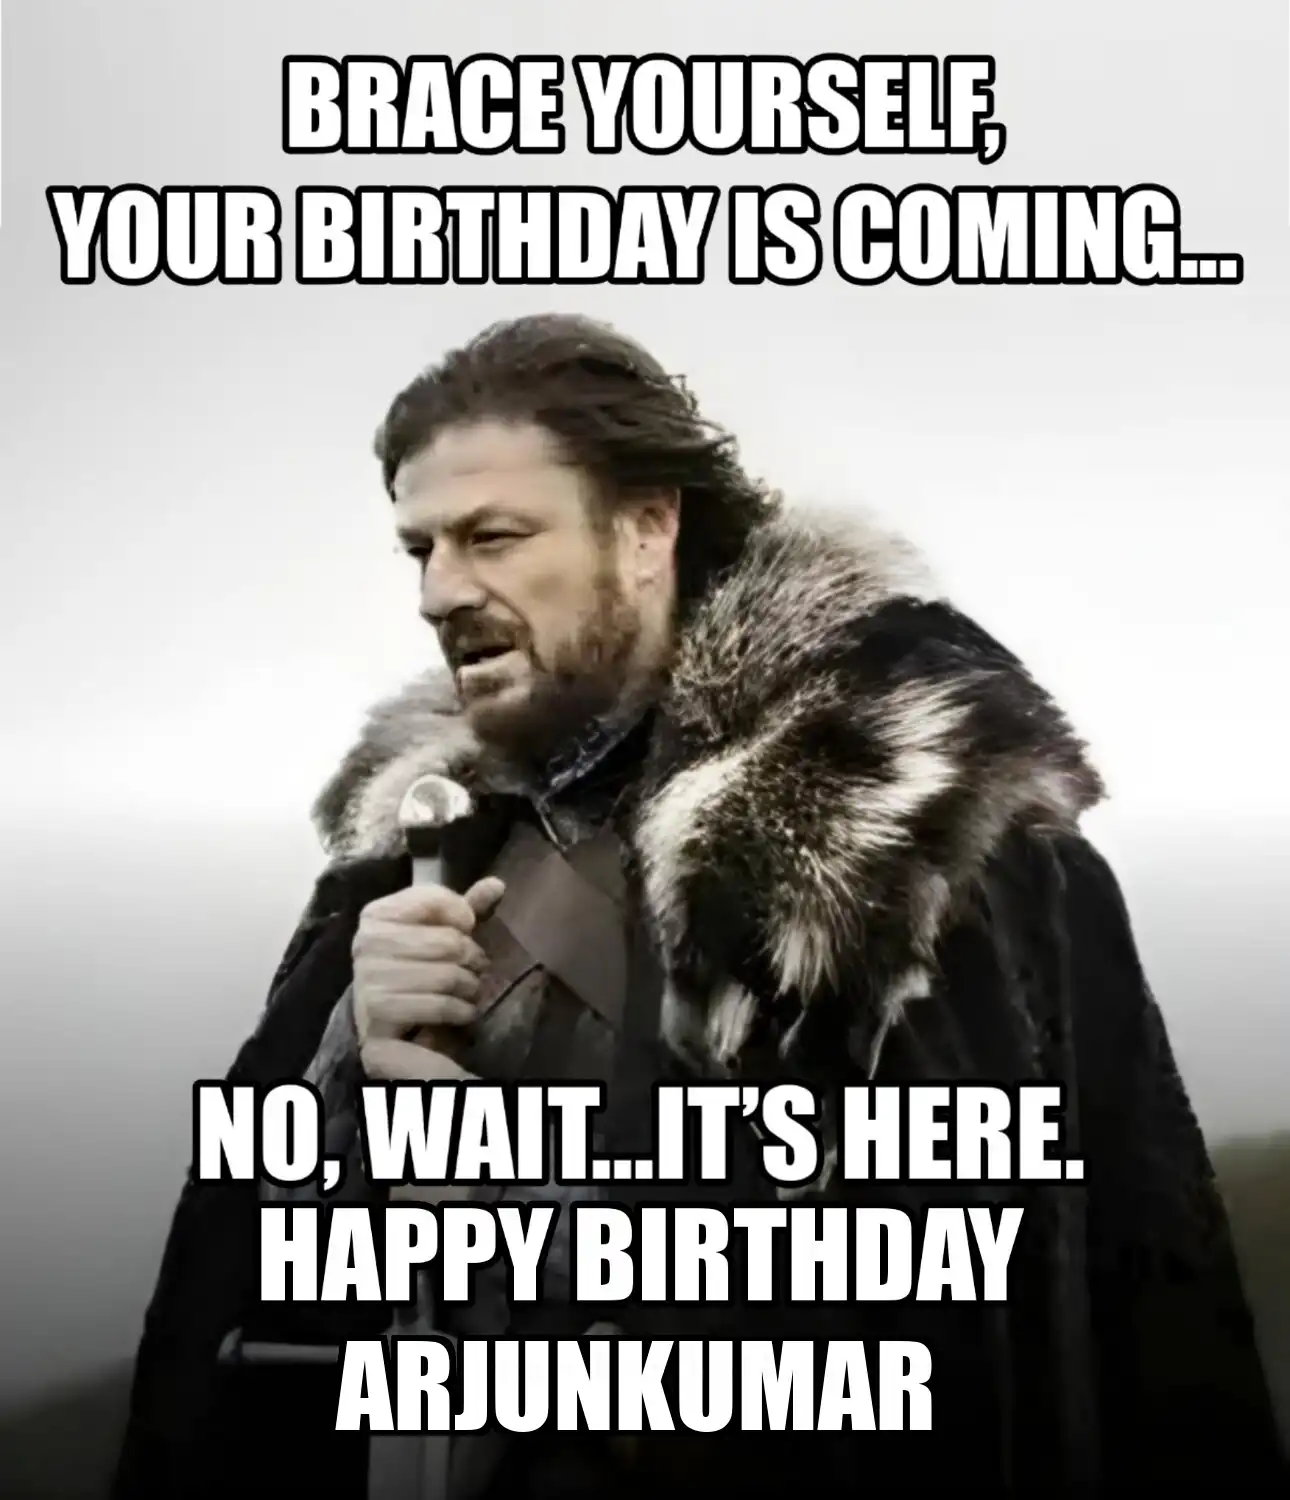 Happy Birthday Arjunkumar Brace Yourself Your Birthday Is Coming Meme